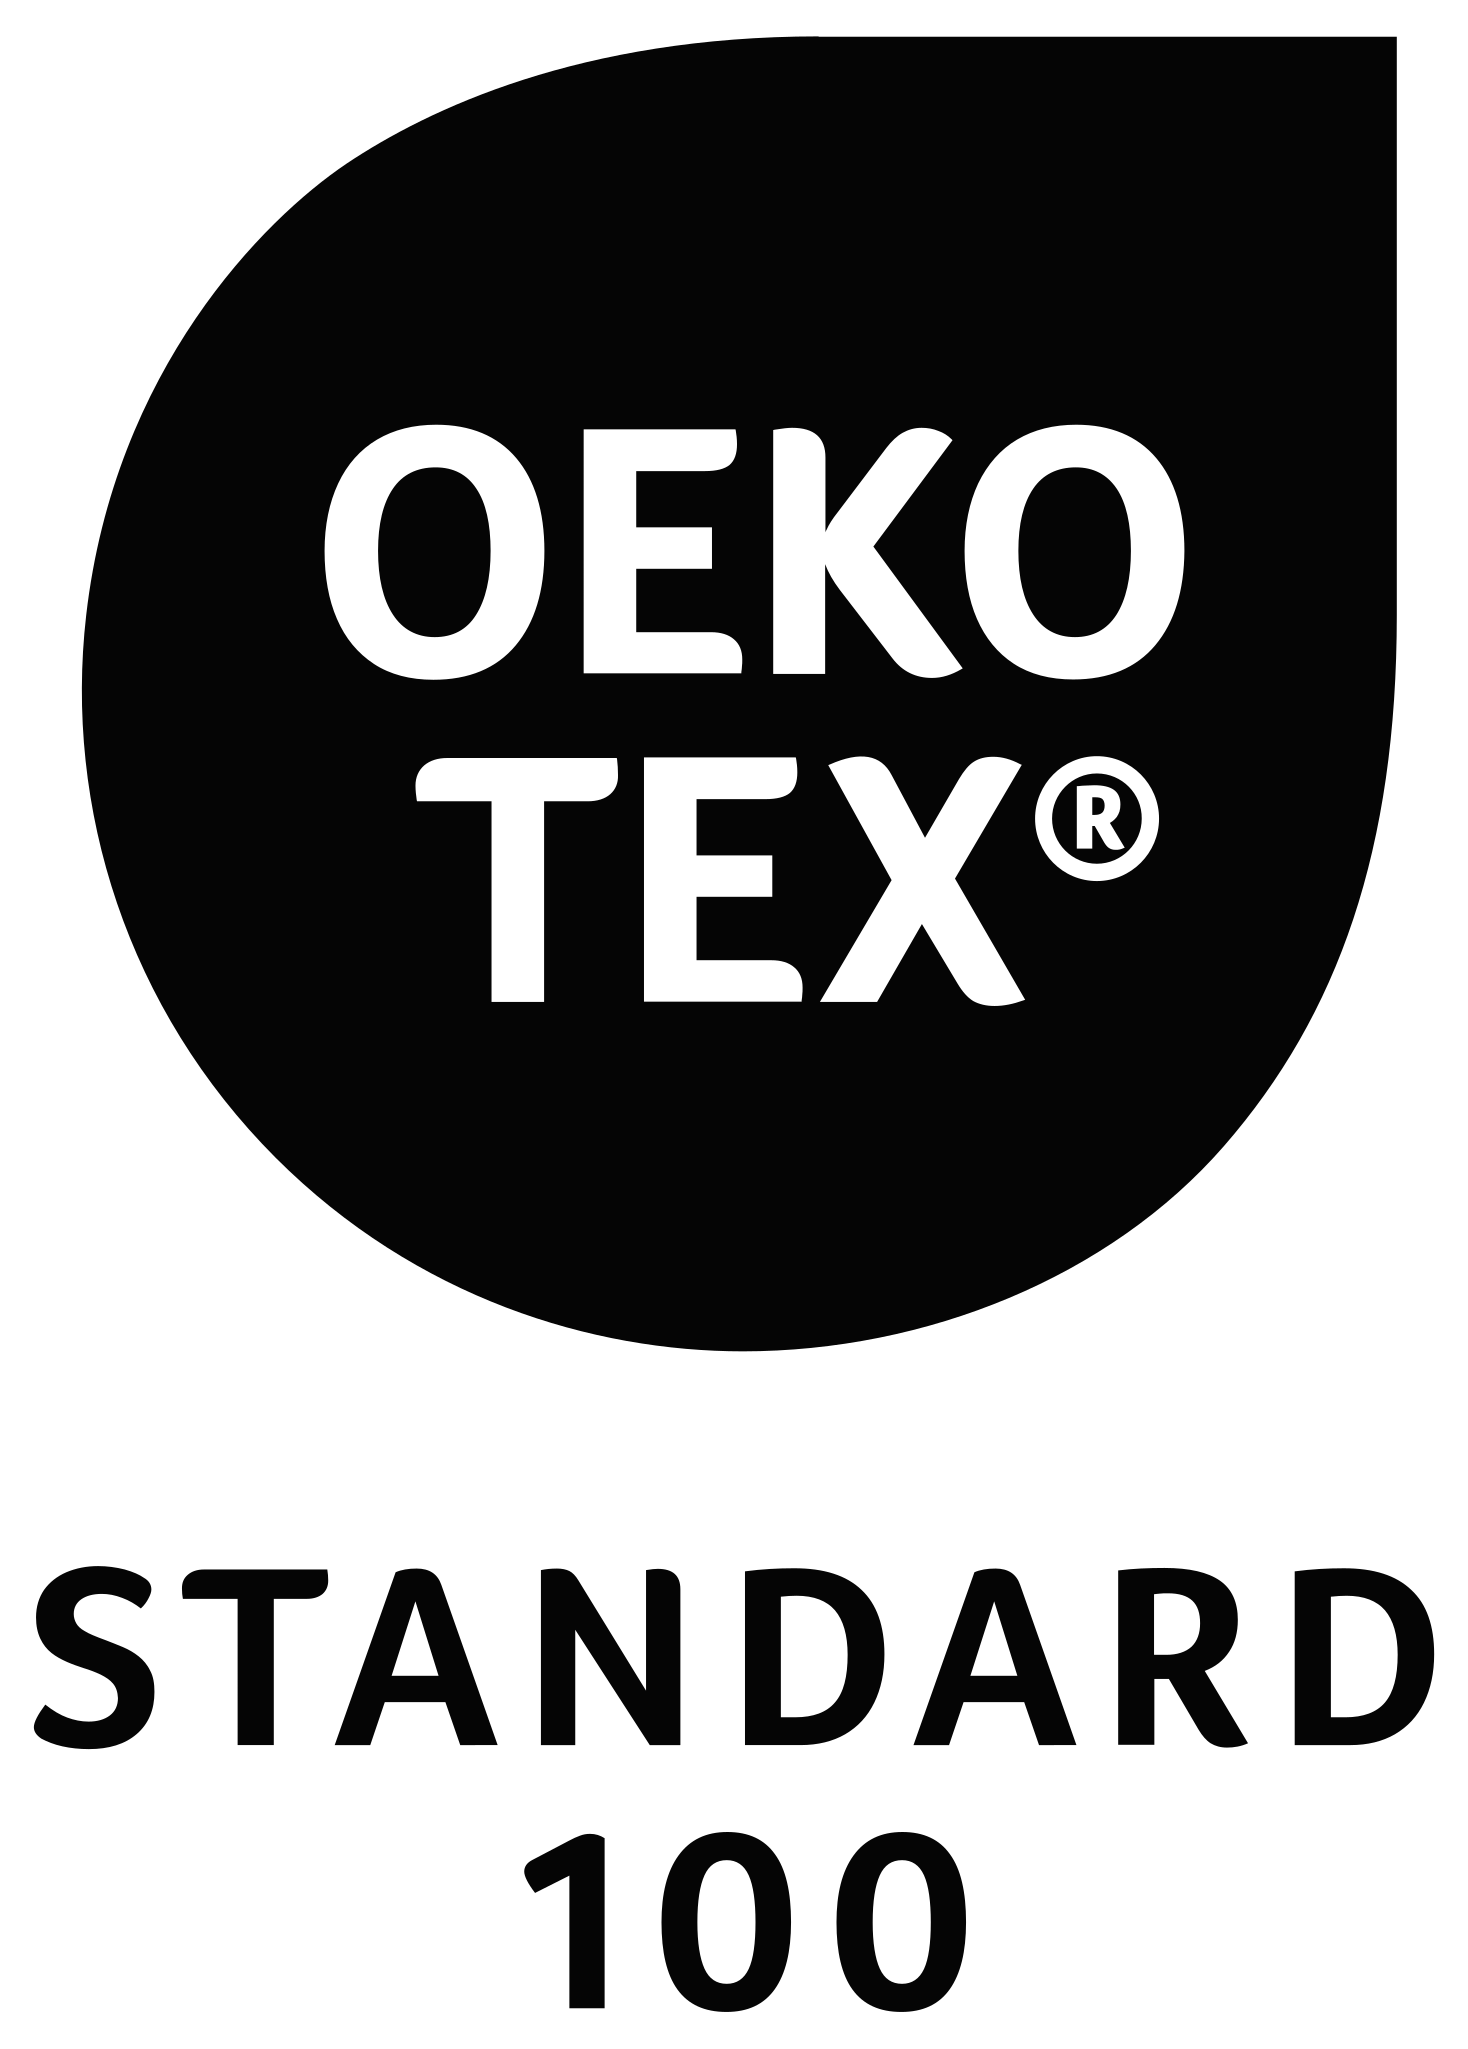 Oeko-Tex - Wikipedia